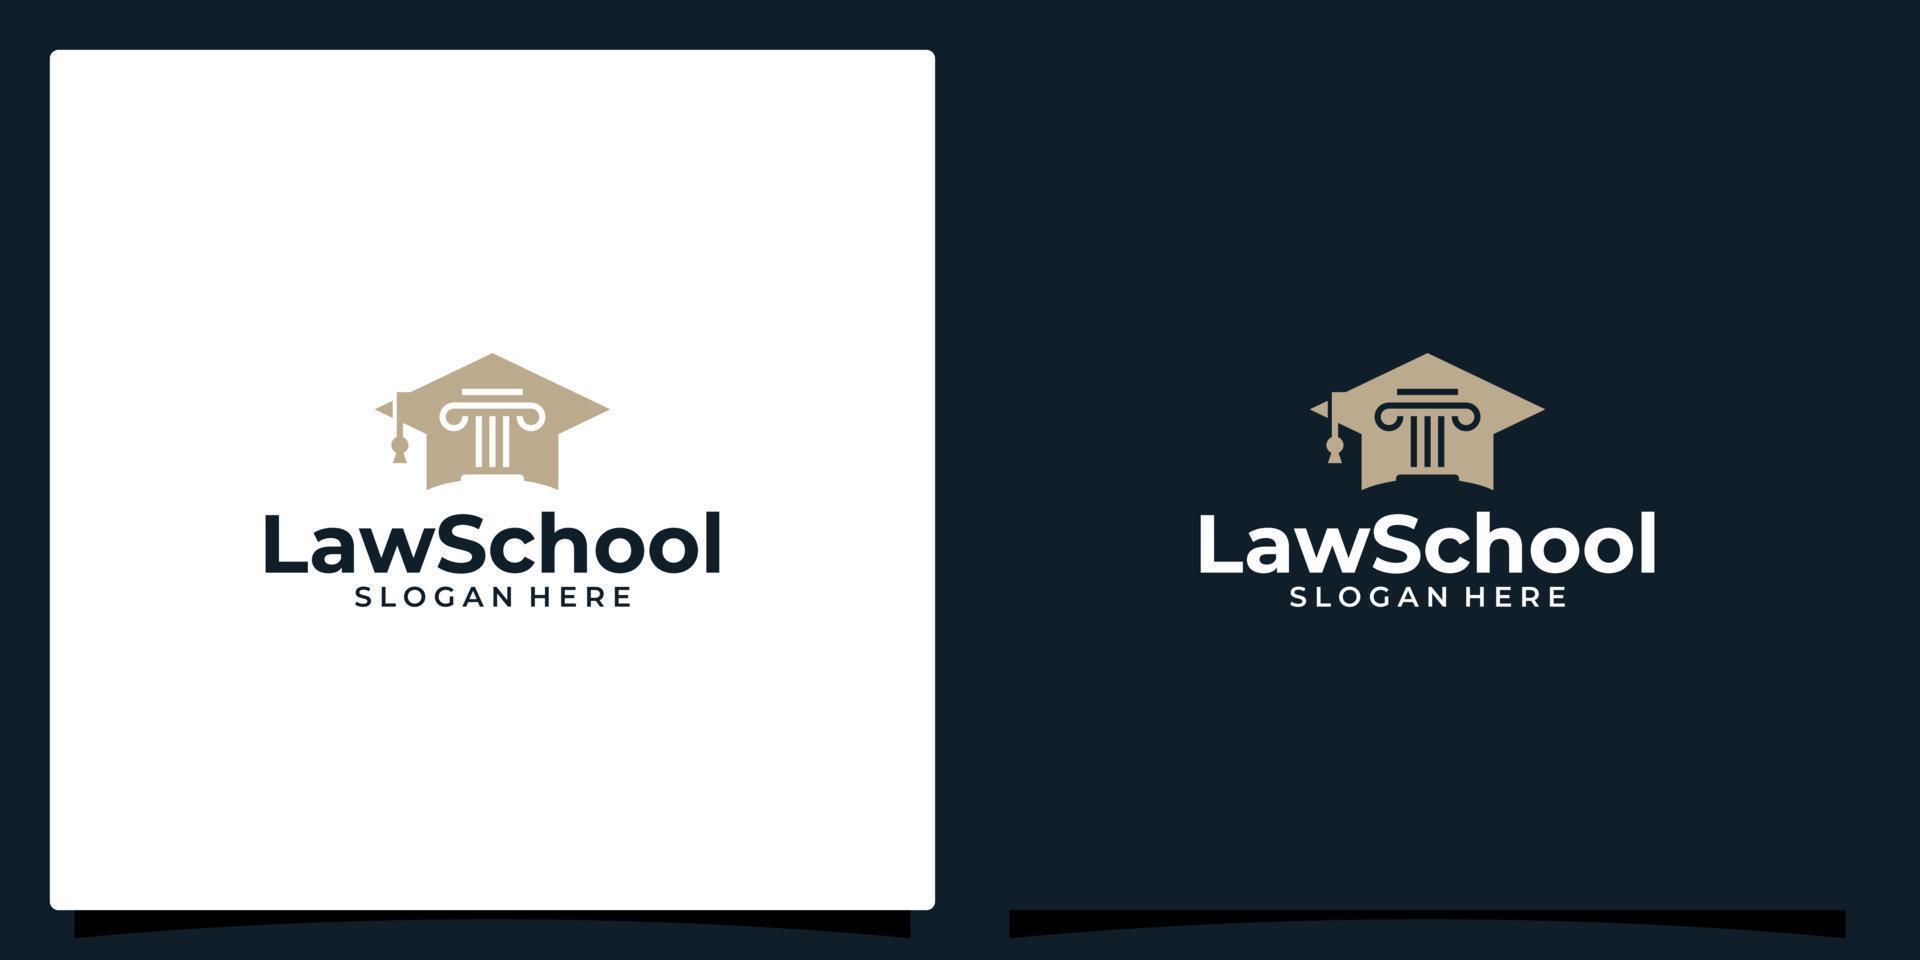 College, Graduate cap, Campus, Education logo design and Law Firm logo vector illustration graphic design.